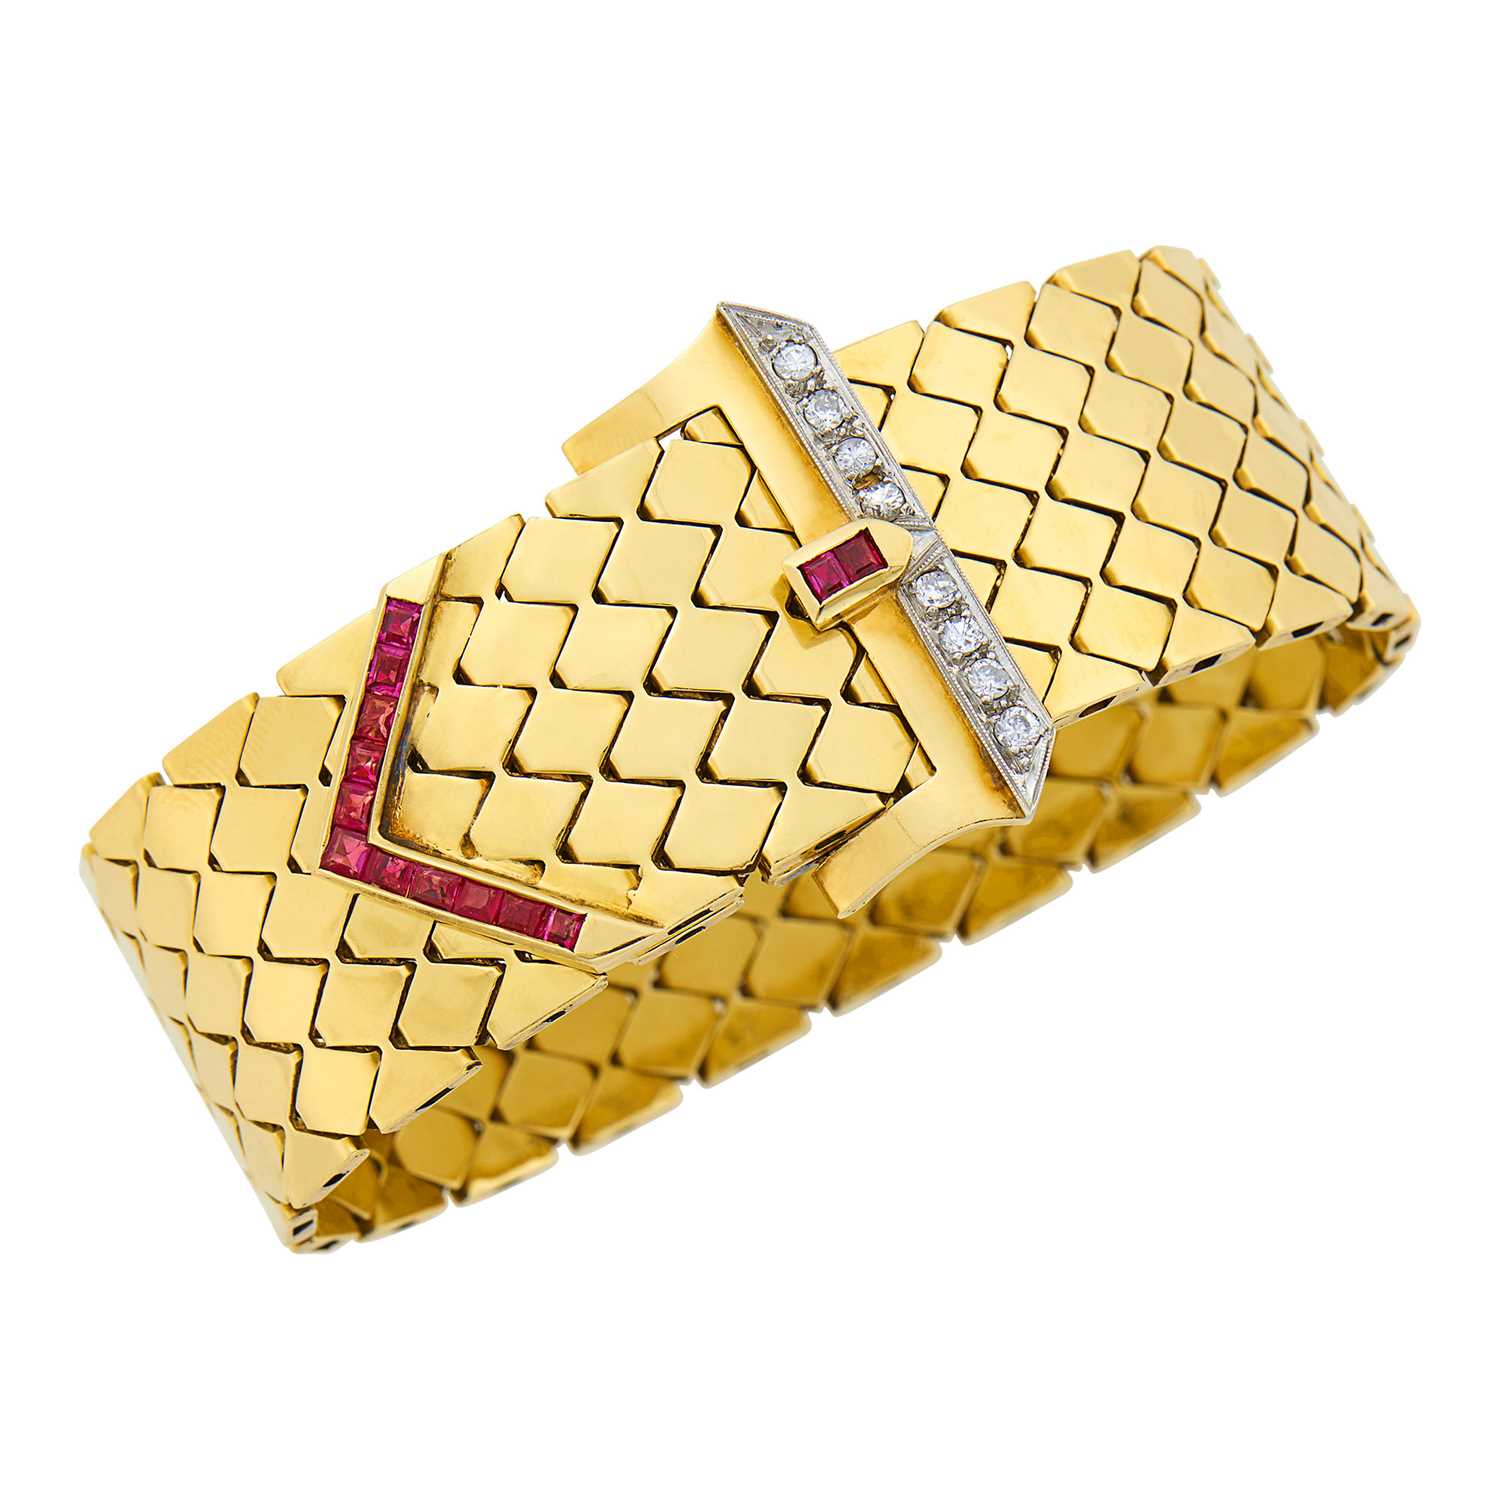 Lot 1090 - Gold, Platinum, Ruby and Diamond Buckle Slide Bracelet